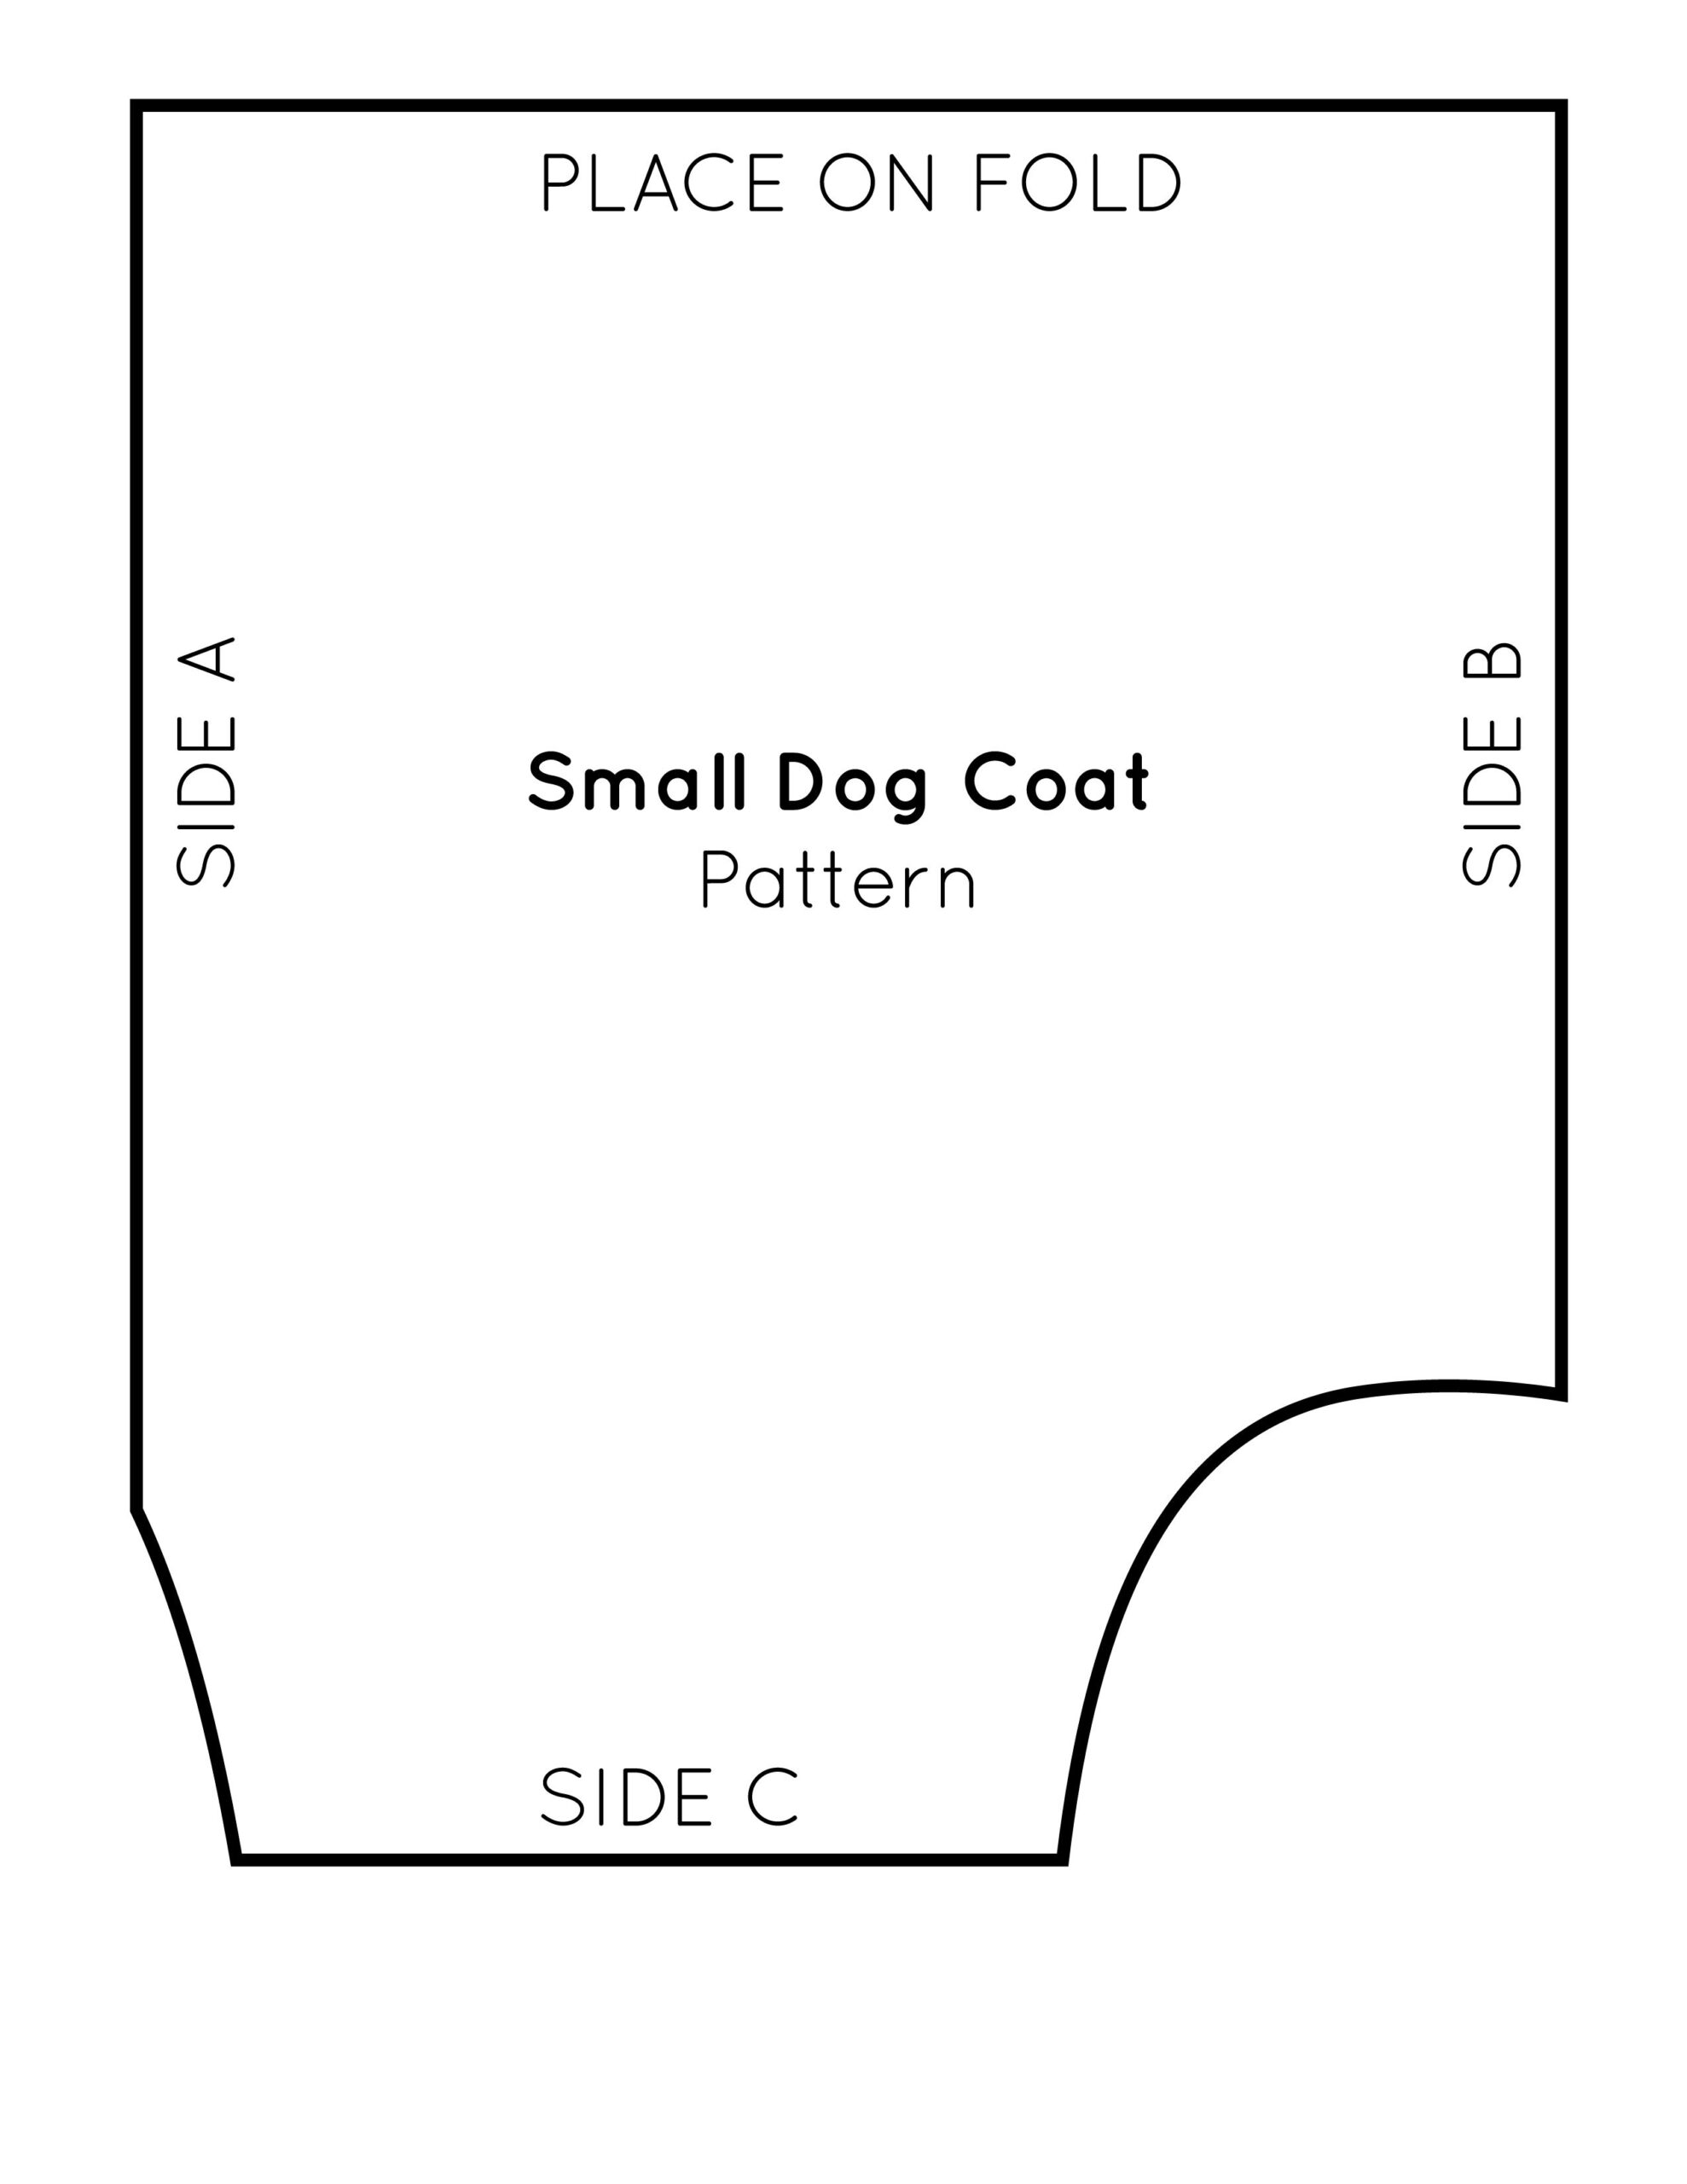 beginner-template-dog-coat-sewing-patterns-free-printable-printables